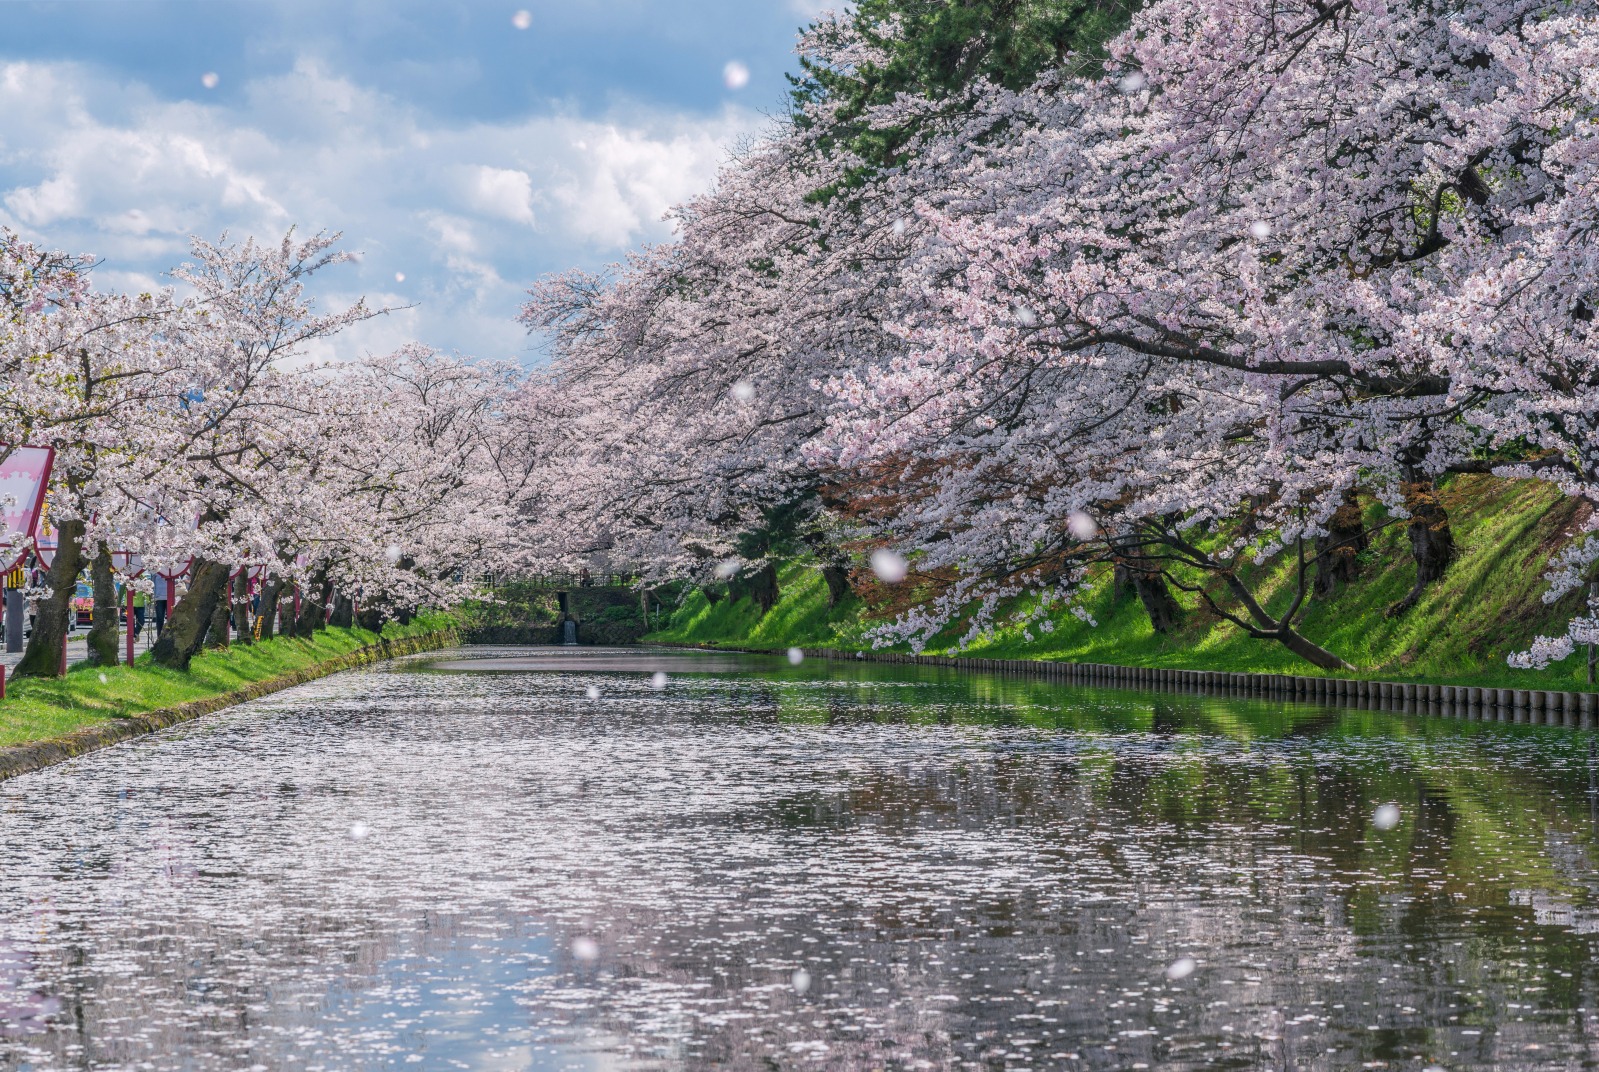 Image of Yuki cherry blossom tree in a park